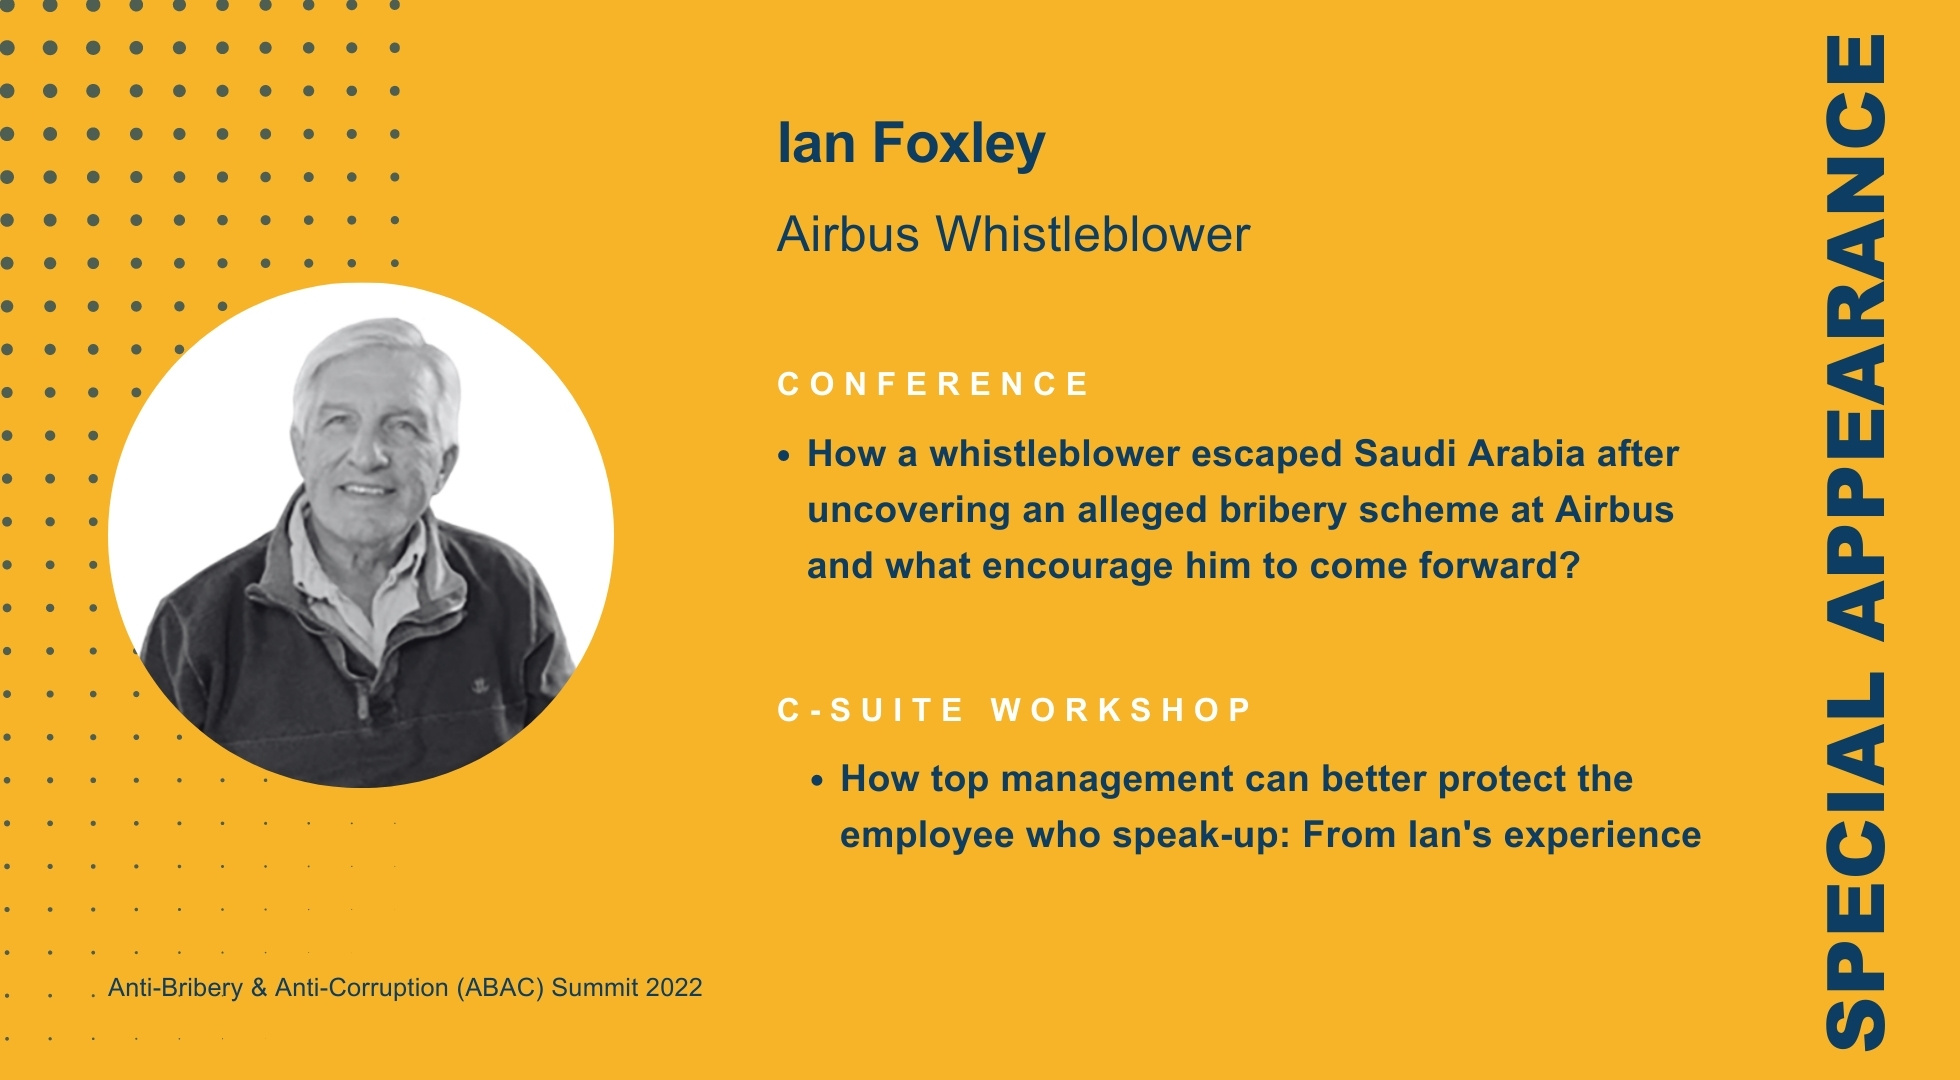 Meet Ian Foxley at ABAC Summit 2022